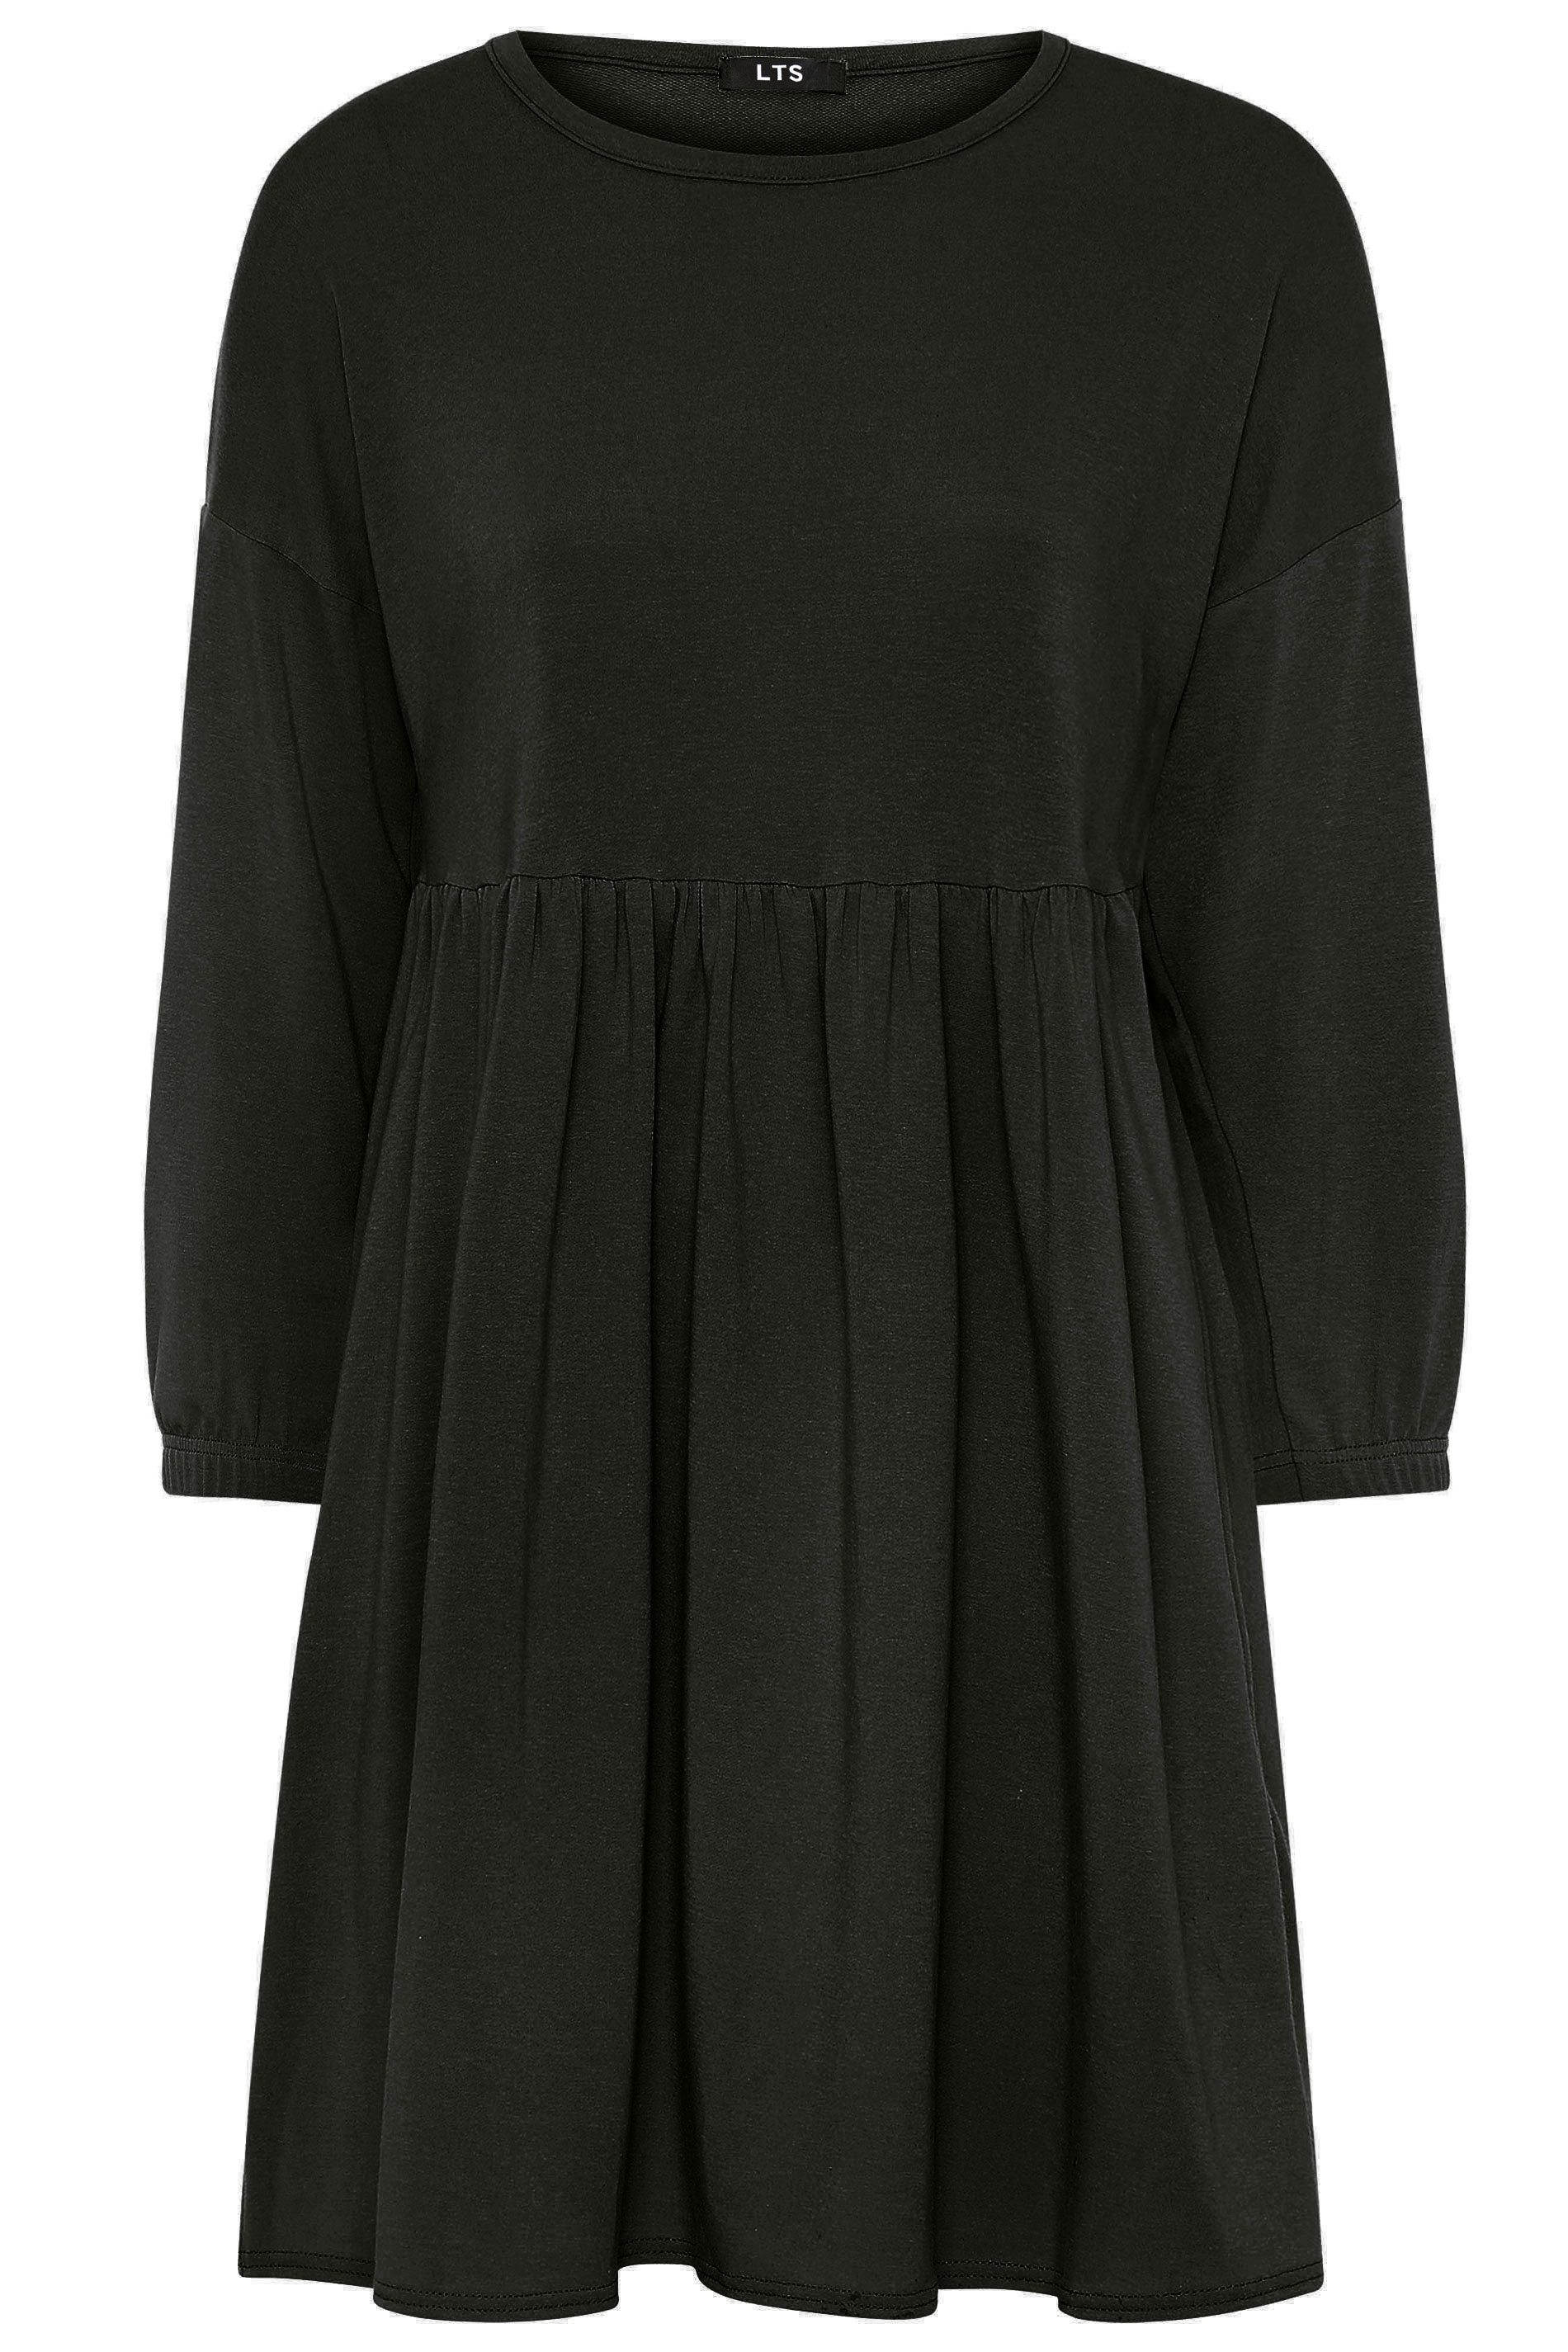 LTS Black Smock Dress | Long Tall Sally